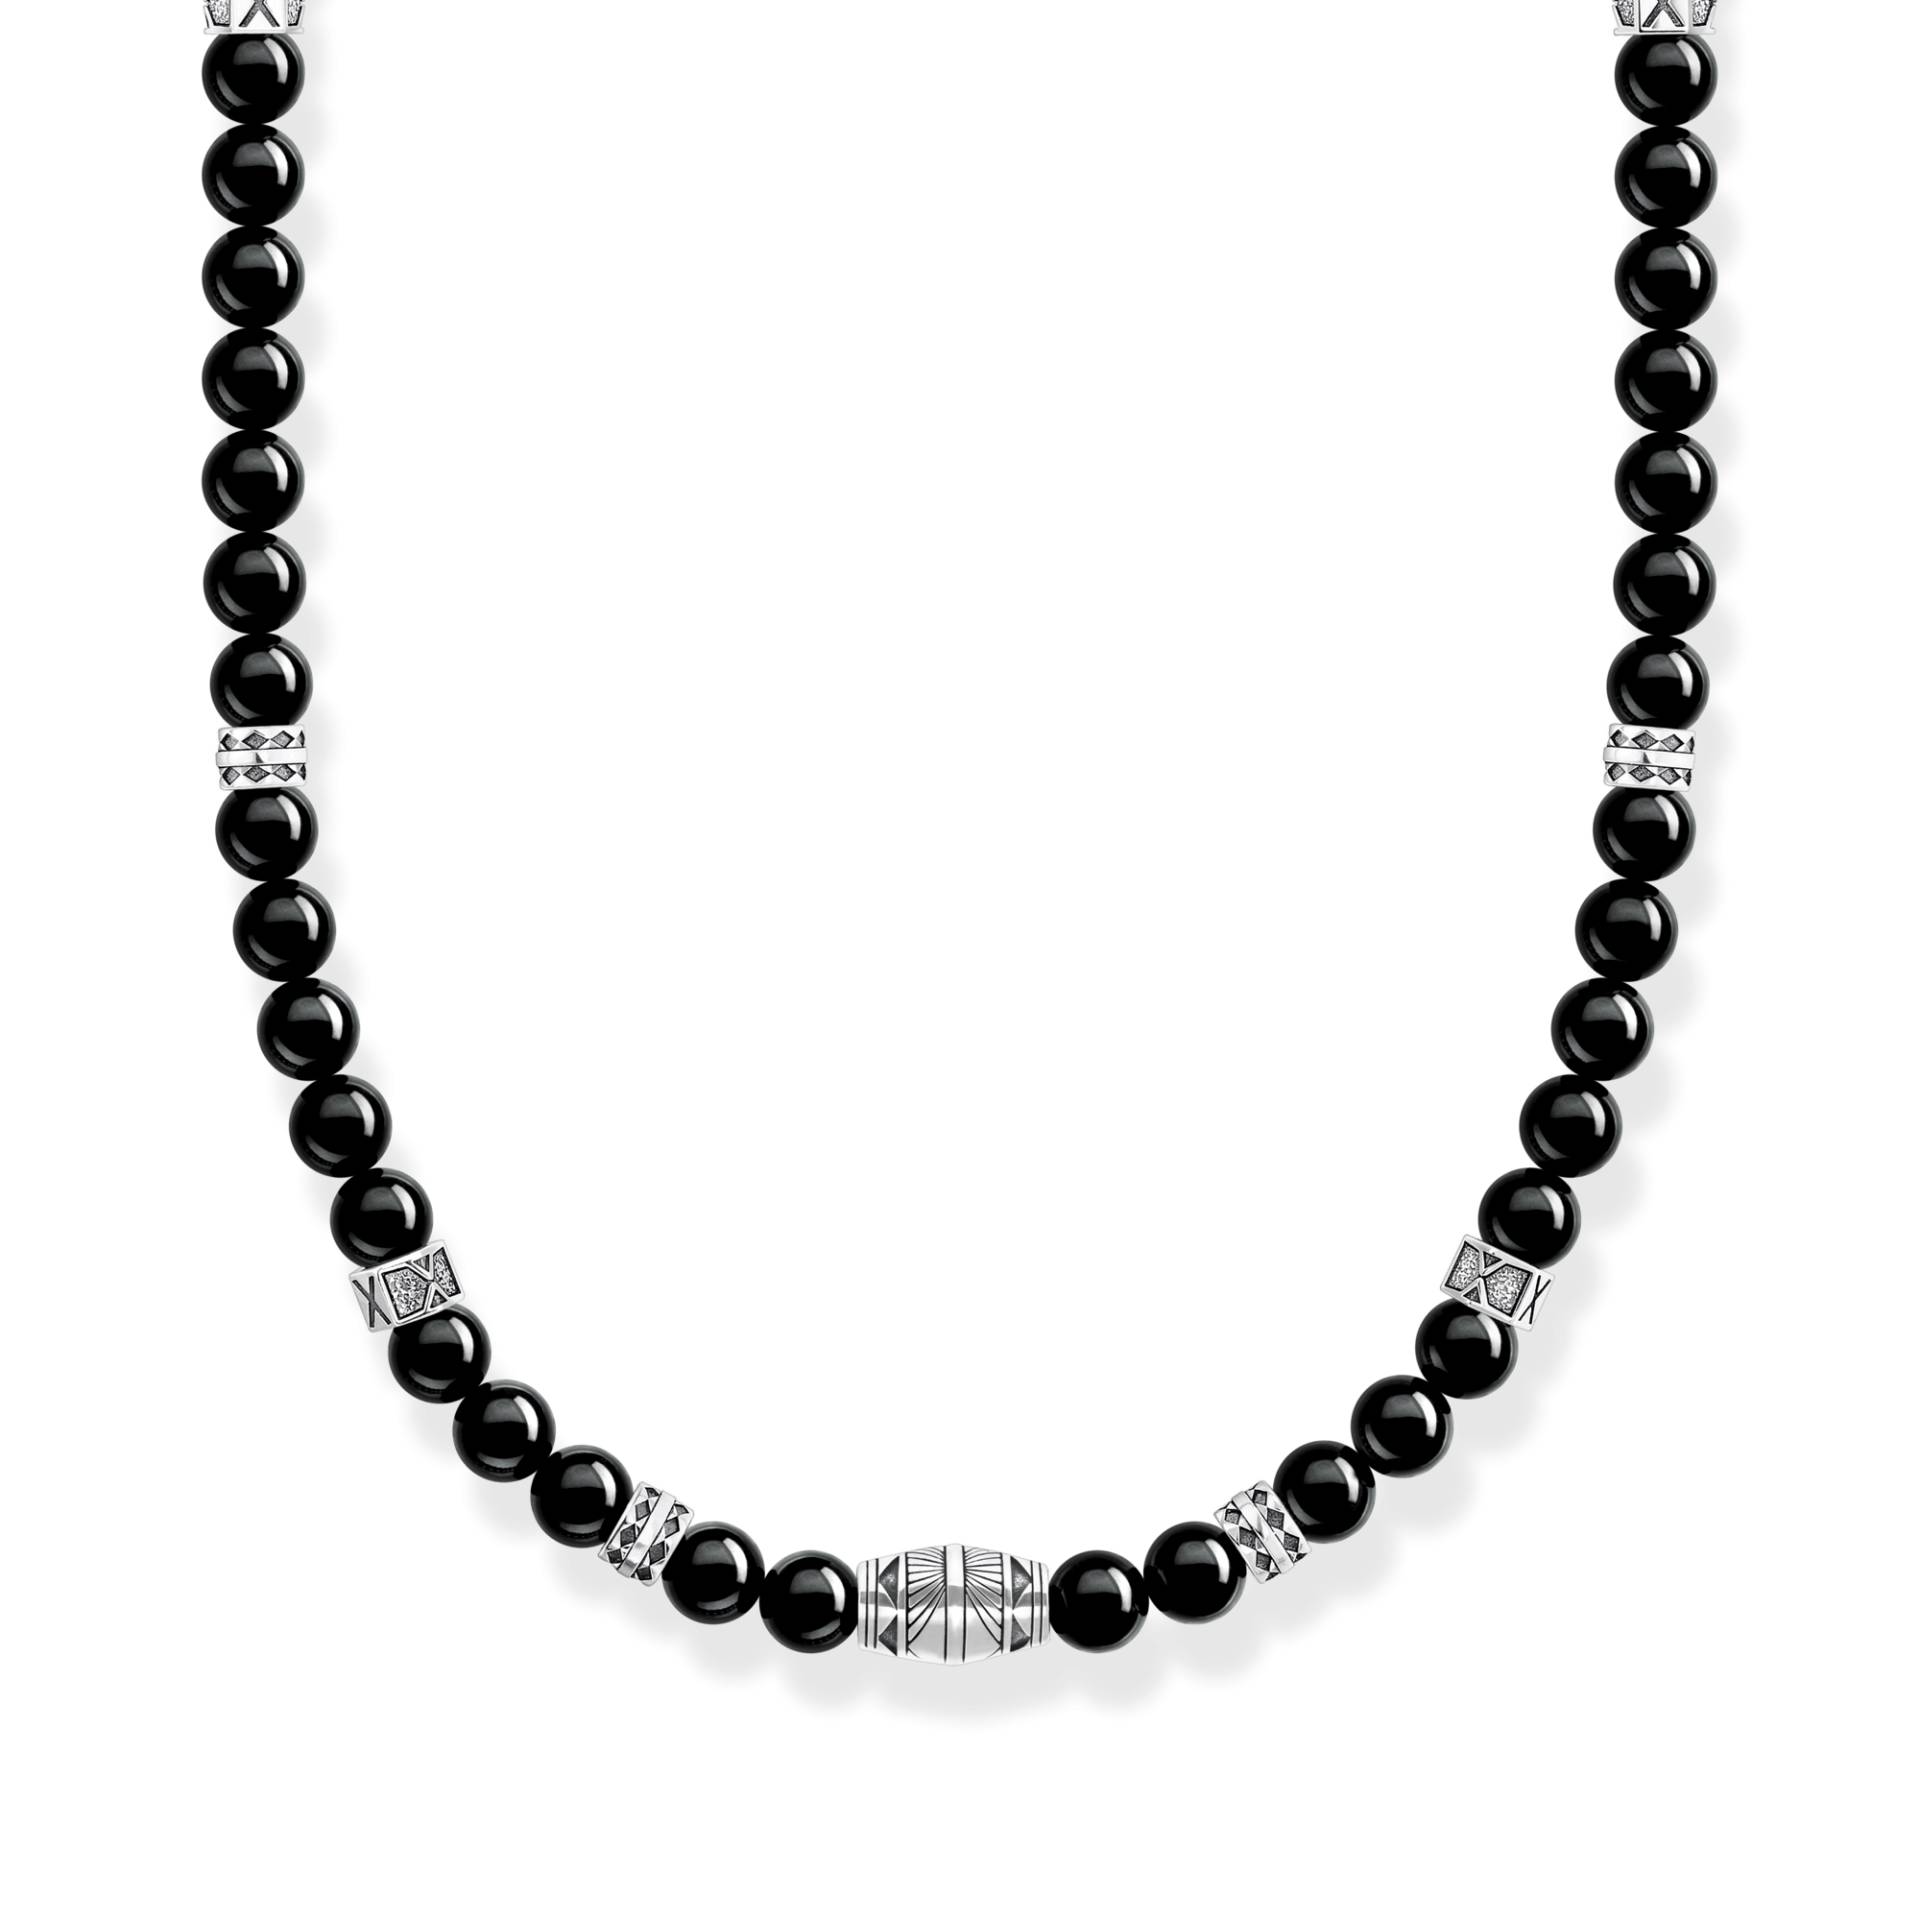 Thomas Sabo Kette mit schwarzen Onyx-Beads Silber schwarz KE2180-507-11-L50 von Thomas Sabo